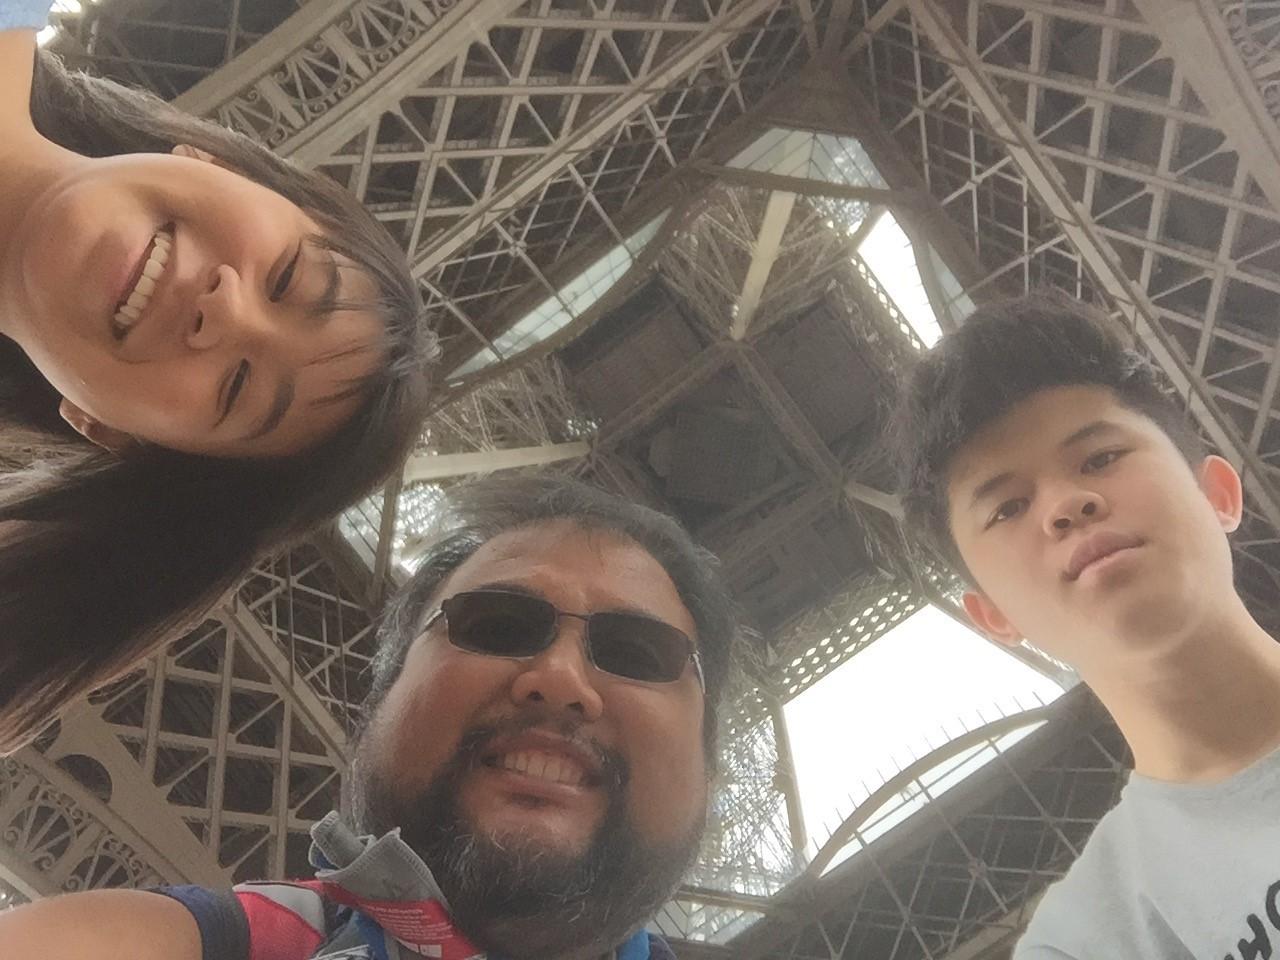 Mr. Padilla and El Camino High students beneath the Eiffel Tower in Paris